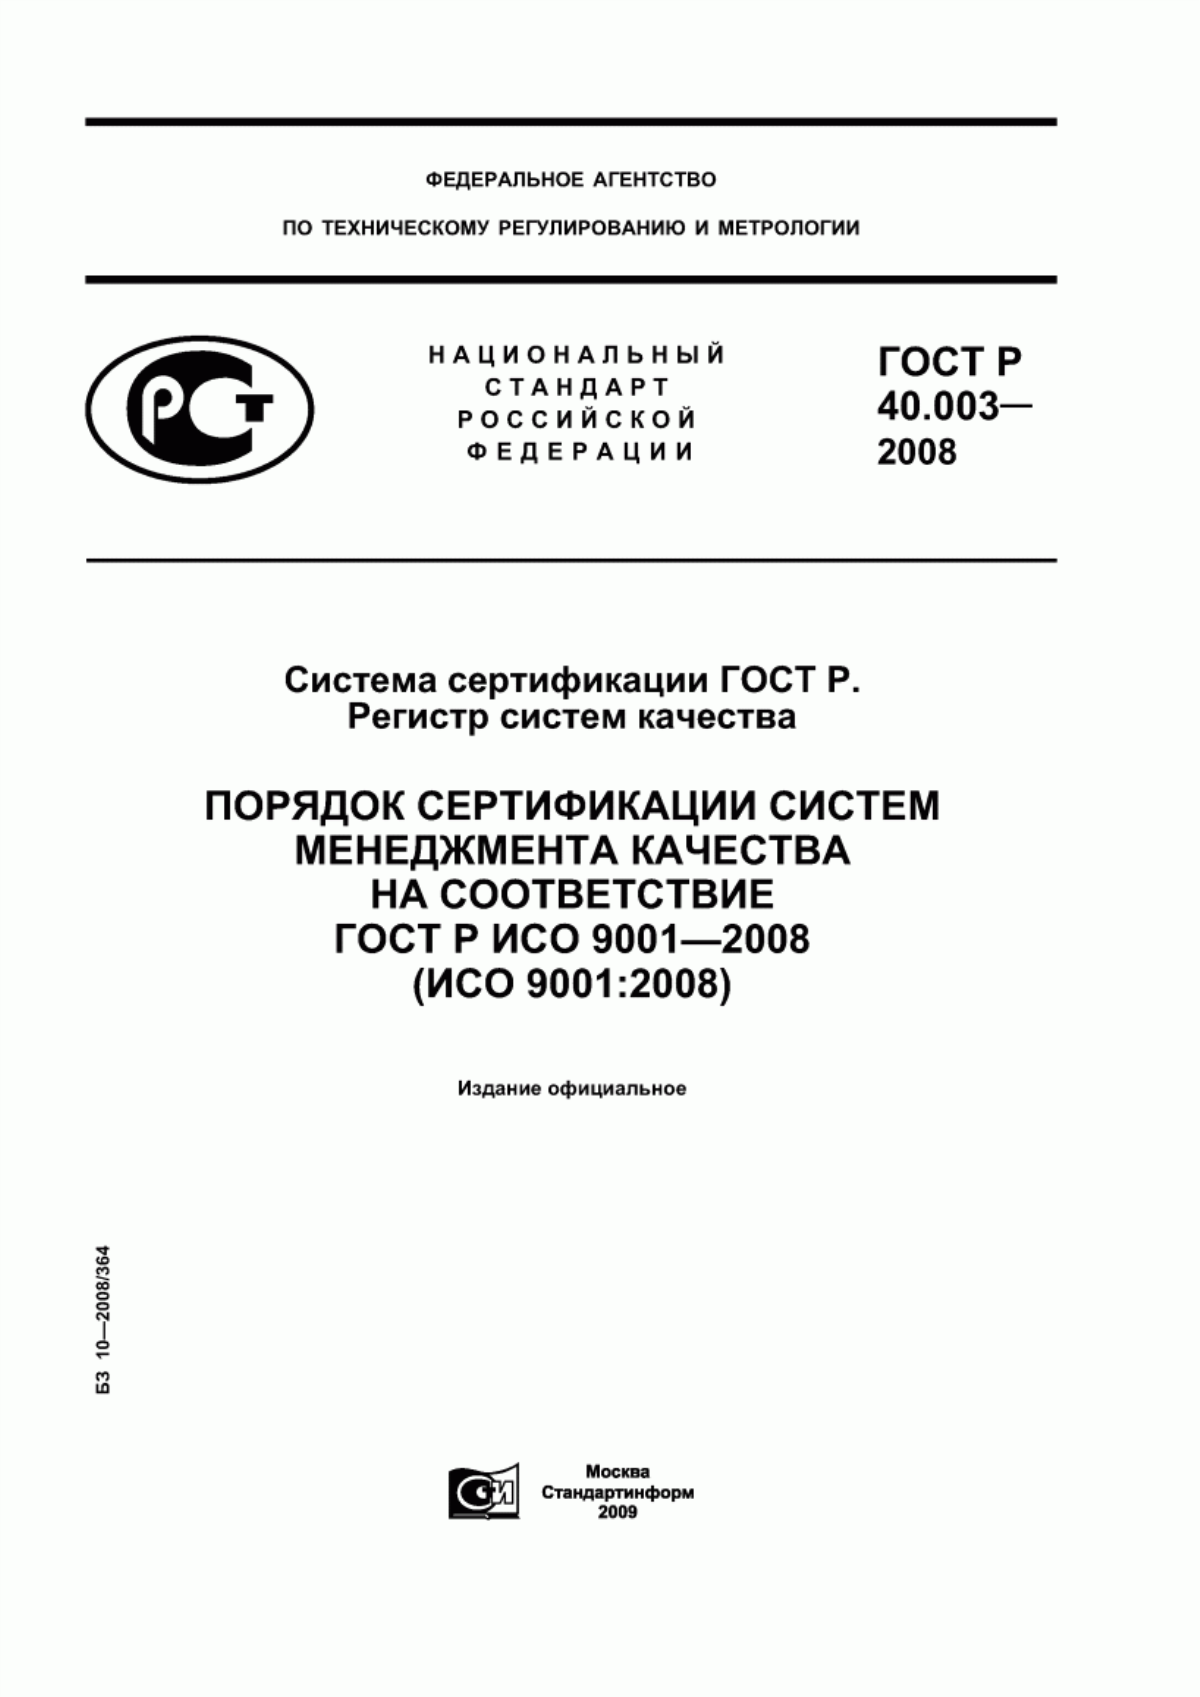 ГОСТ Р 40.003-2008 Система сертификации ГОСТ Р. Регистр систем качества. Порядок сертификации систем менеджмента качества на соответствие ГОСТ Р ИСО 9001-2008 (ИСО 9001:2008)